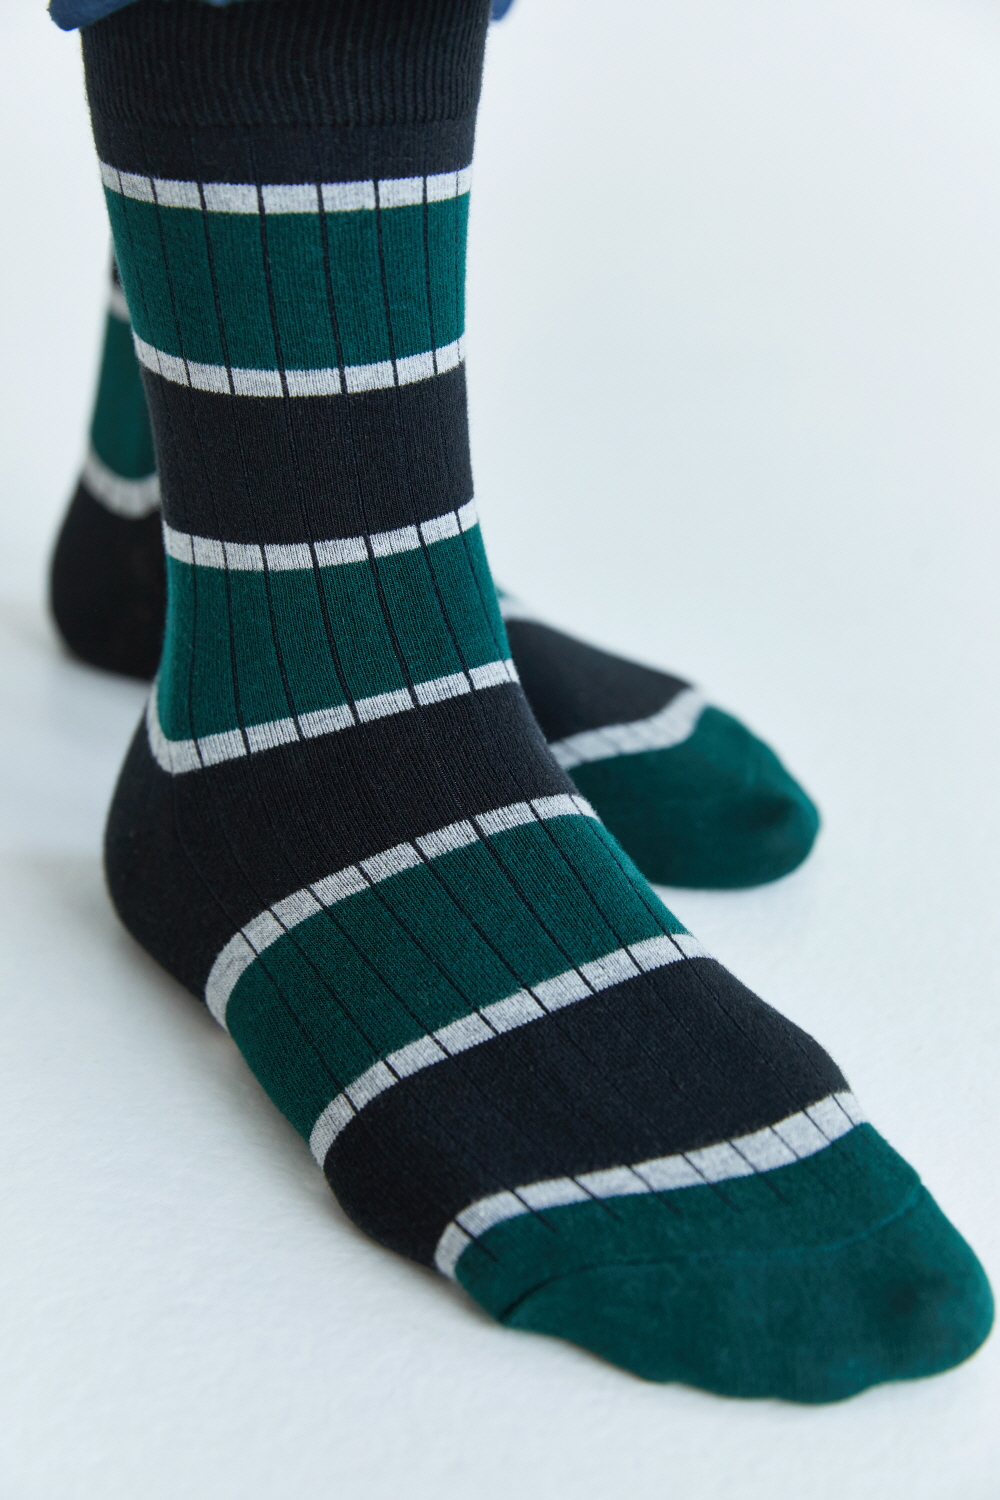 socks detail image-S12L35